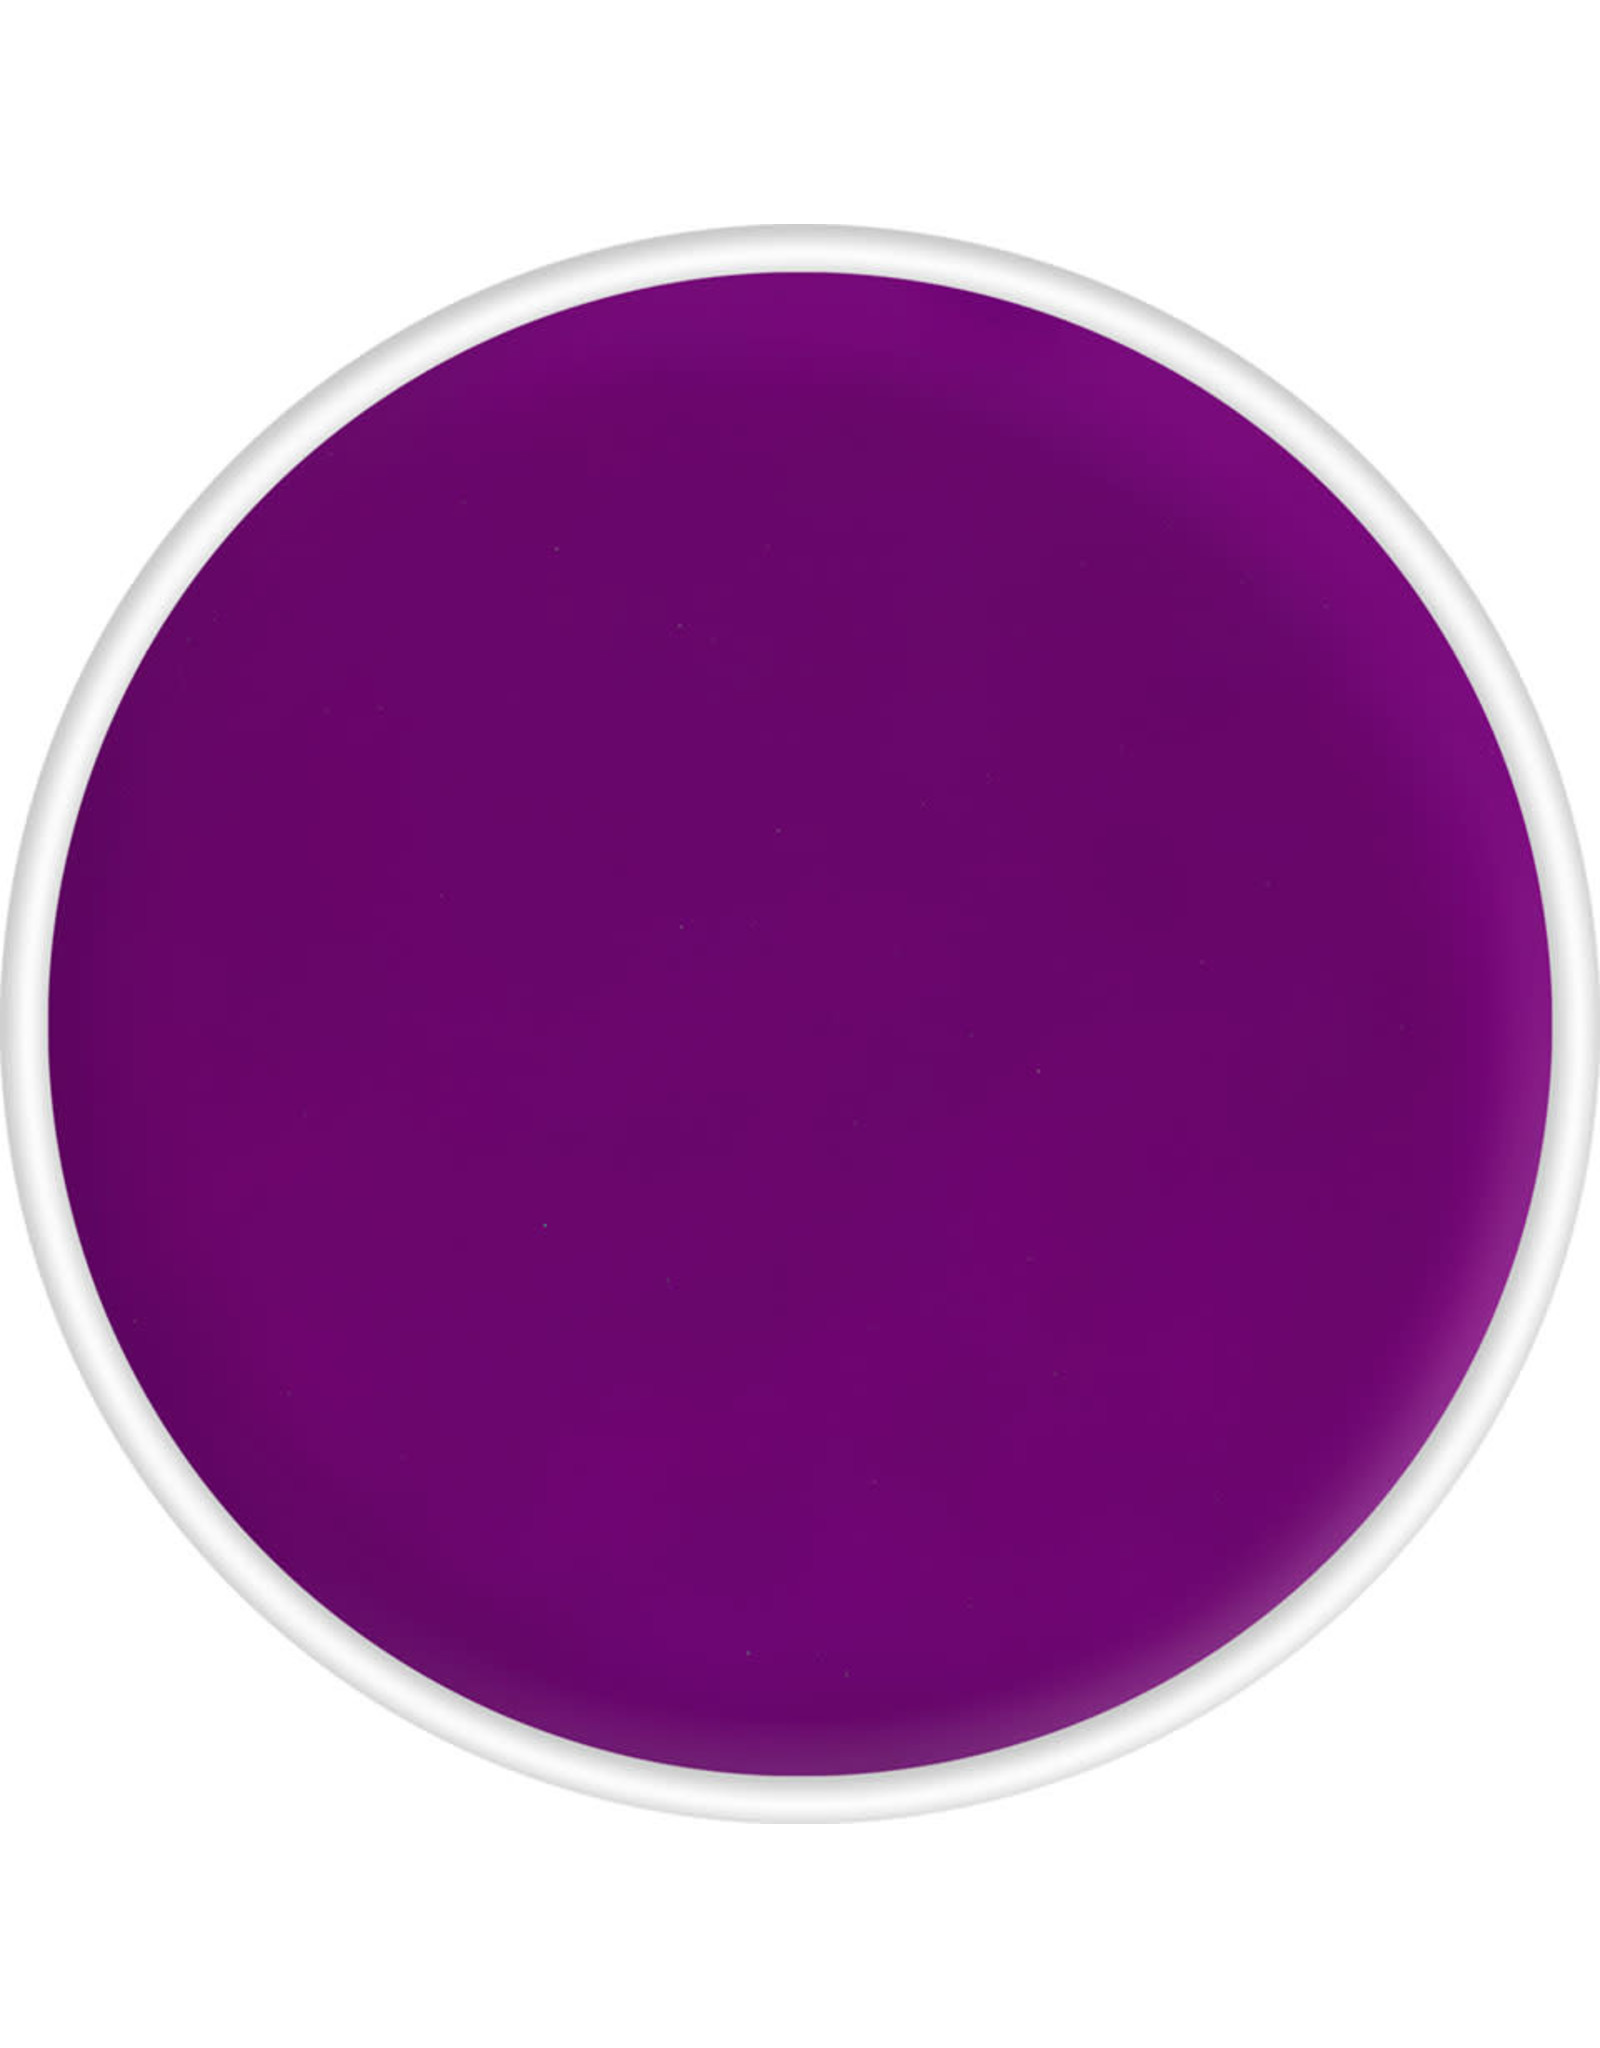 Kryolan Kryolan Aquacolor - UV-Dayglow - 4ml refill size